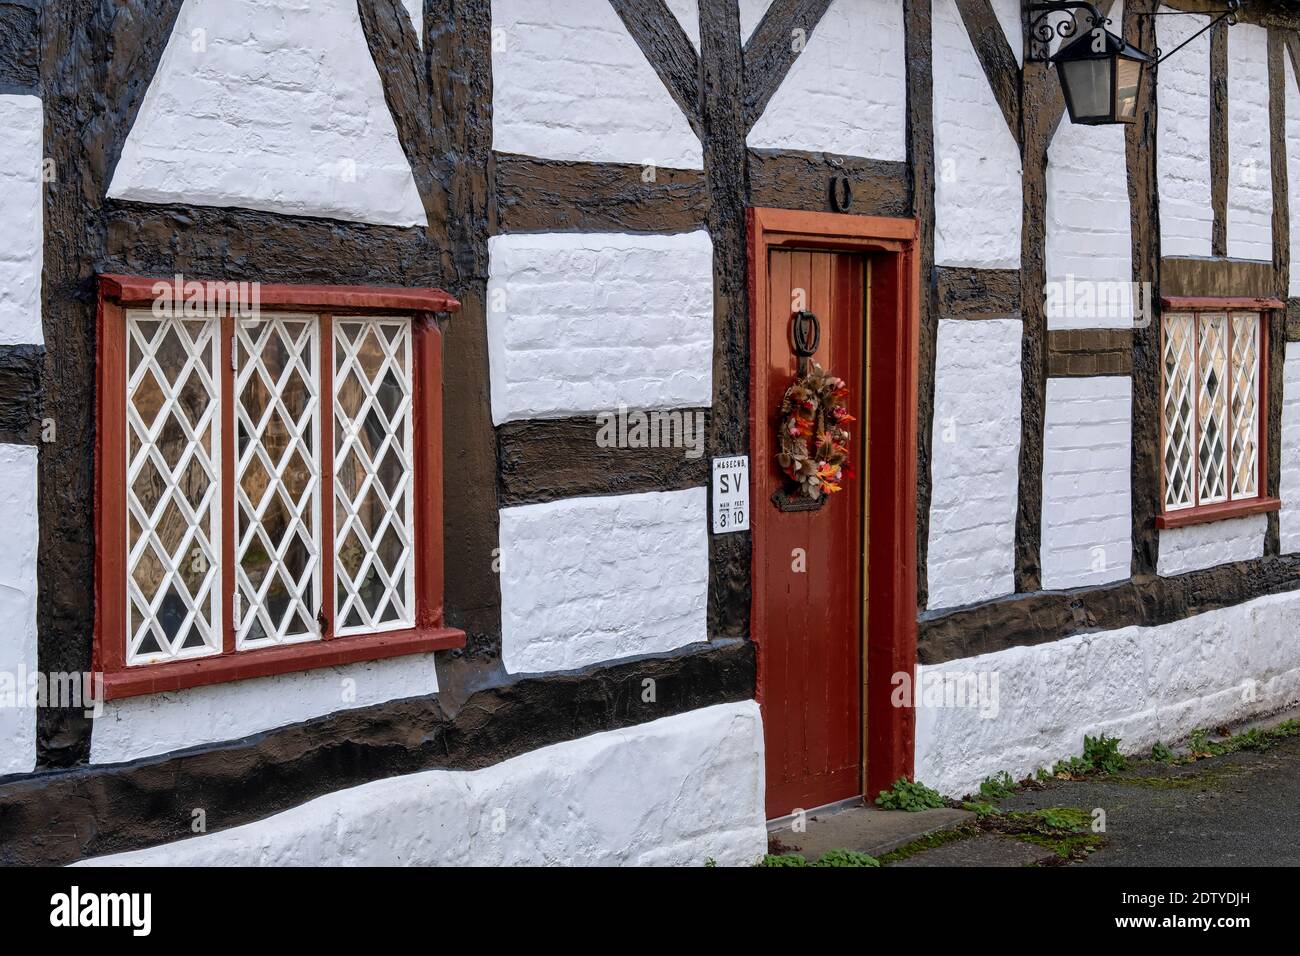 Detalle exterior de Smithy Cottage, Beeston, Cheshire, Inglaterra, Reino Unido Foto de stock